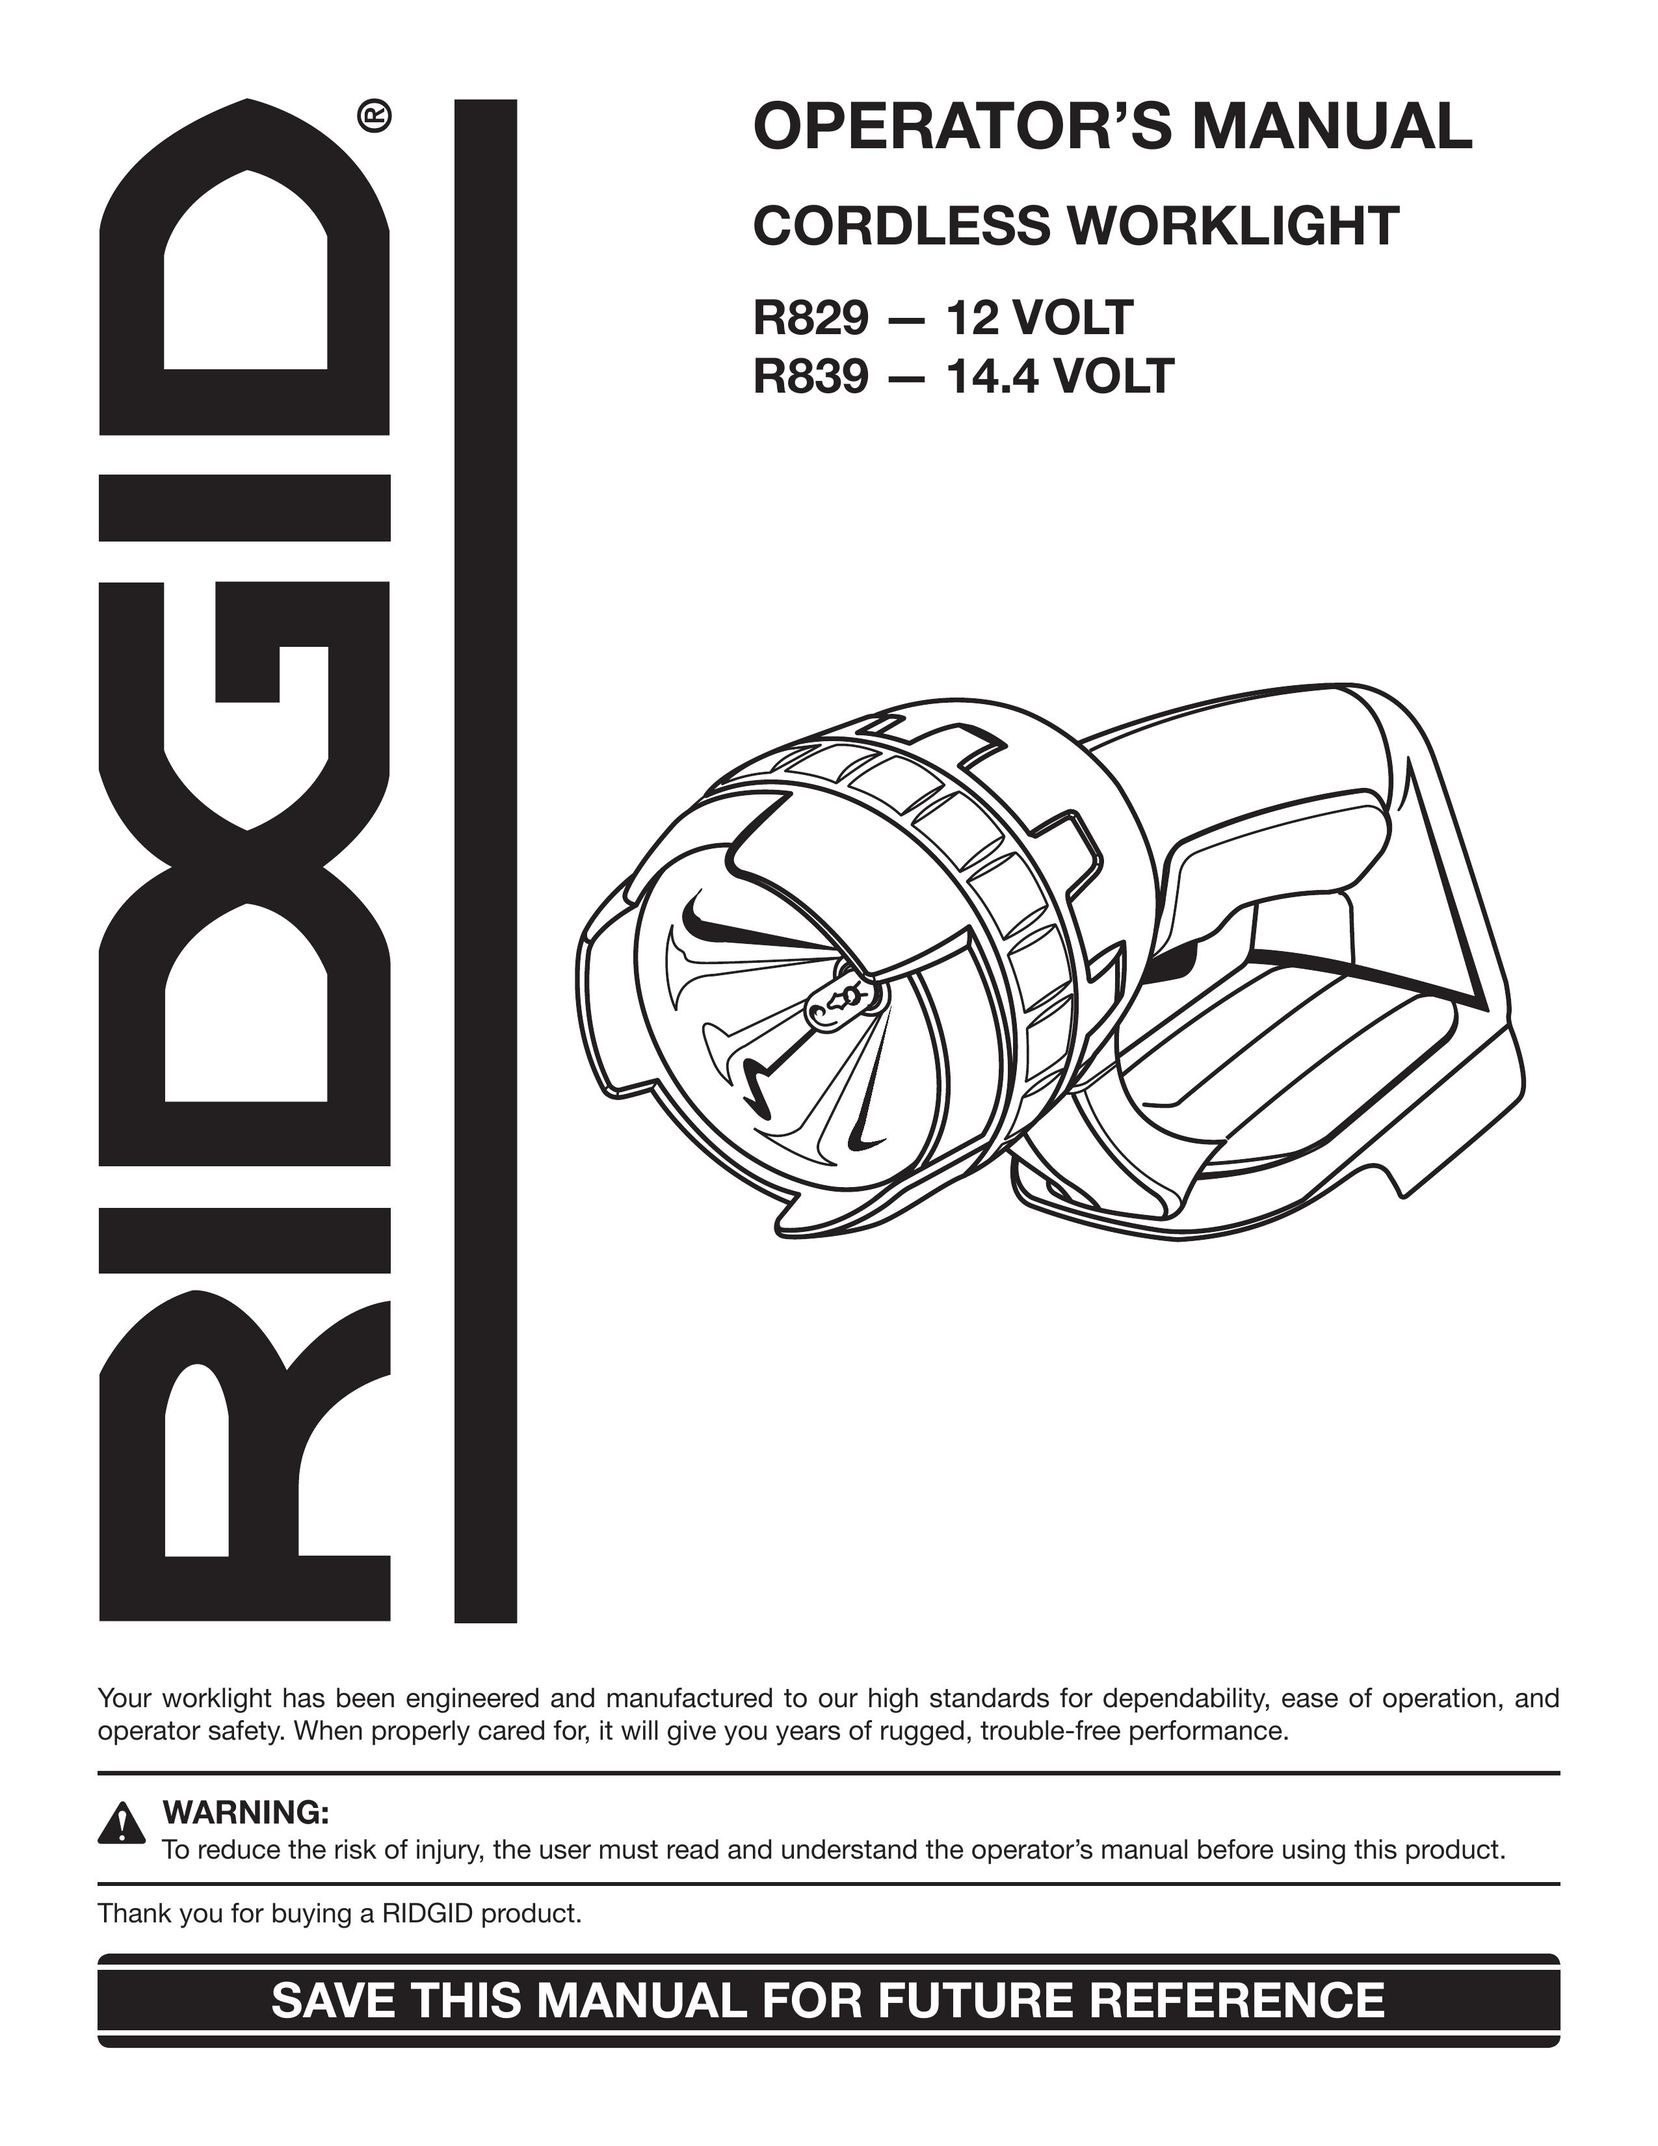 RIDGID R839 Work Light User Manual